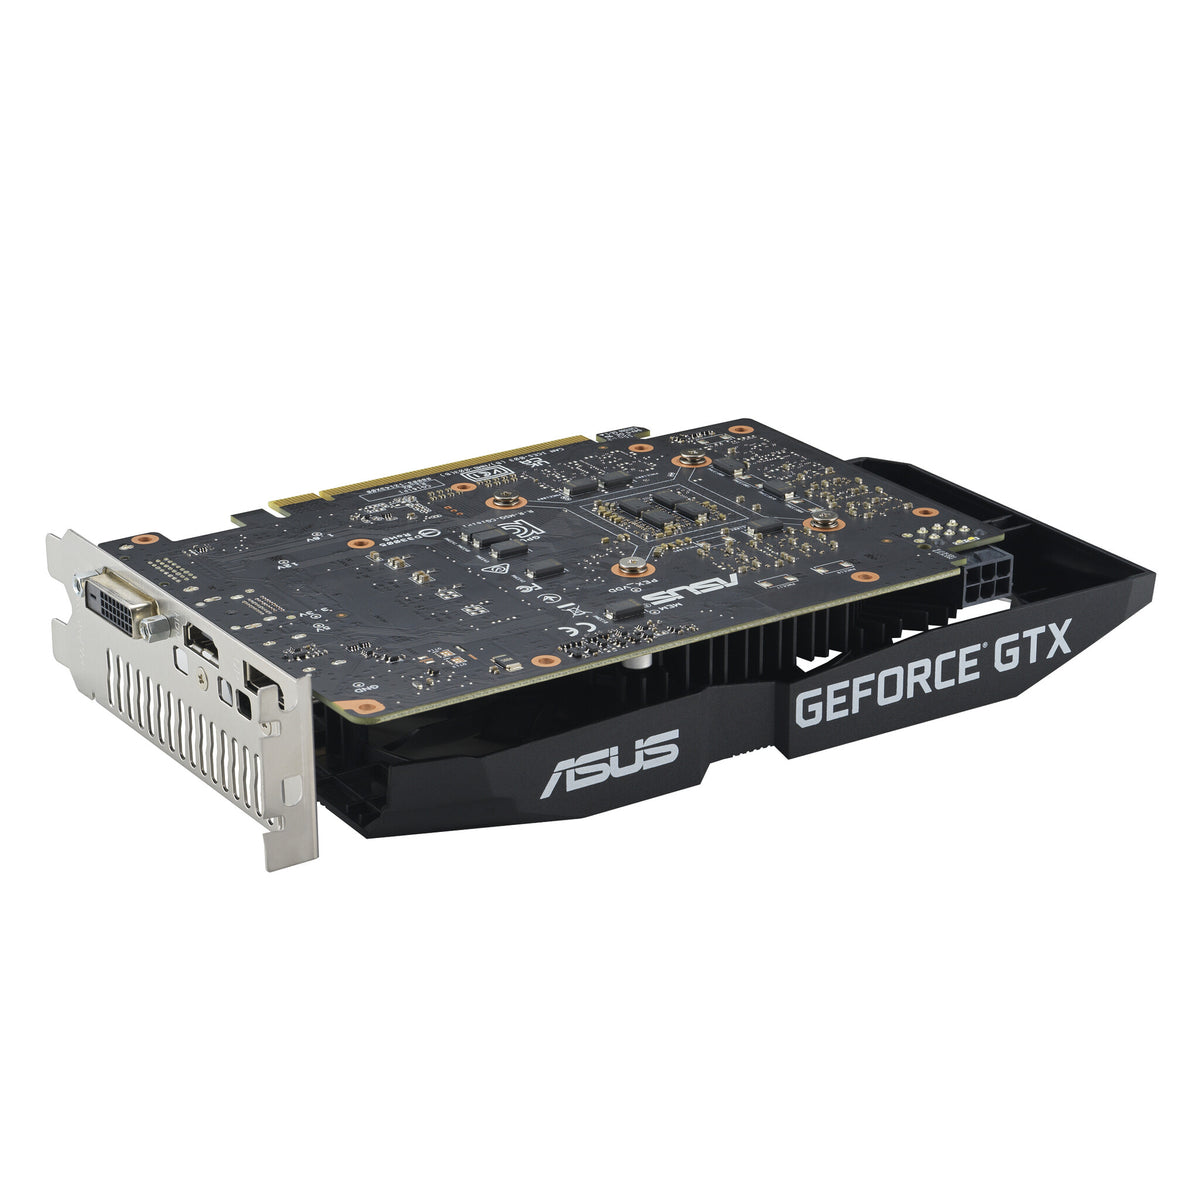 ASUS Dual OC - NVIDIA 4 GB GDDR6 GeForce GTX 1650 graphics card